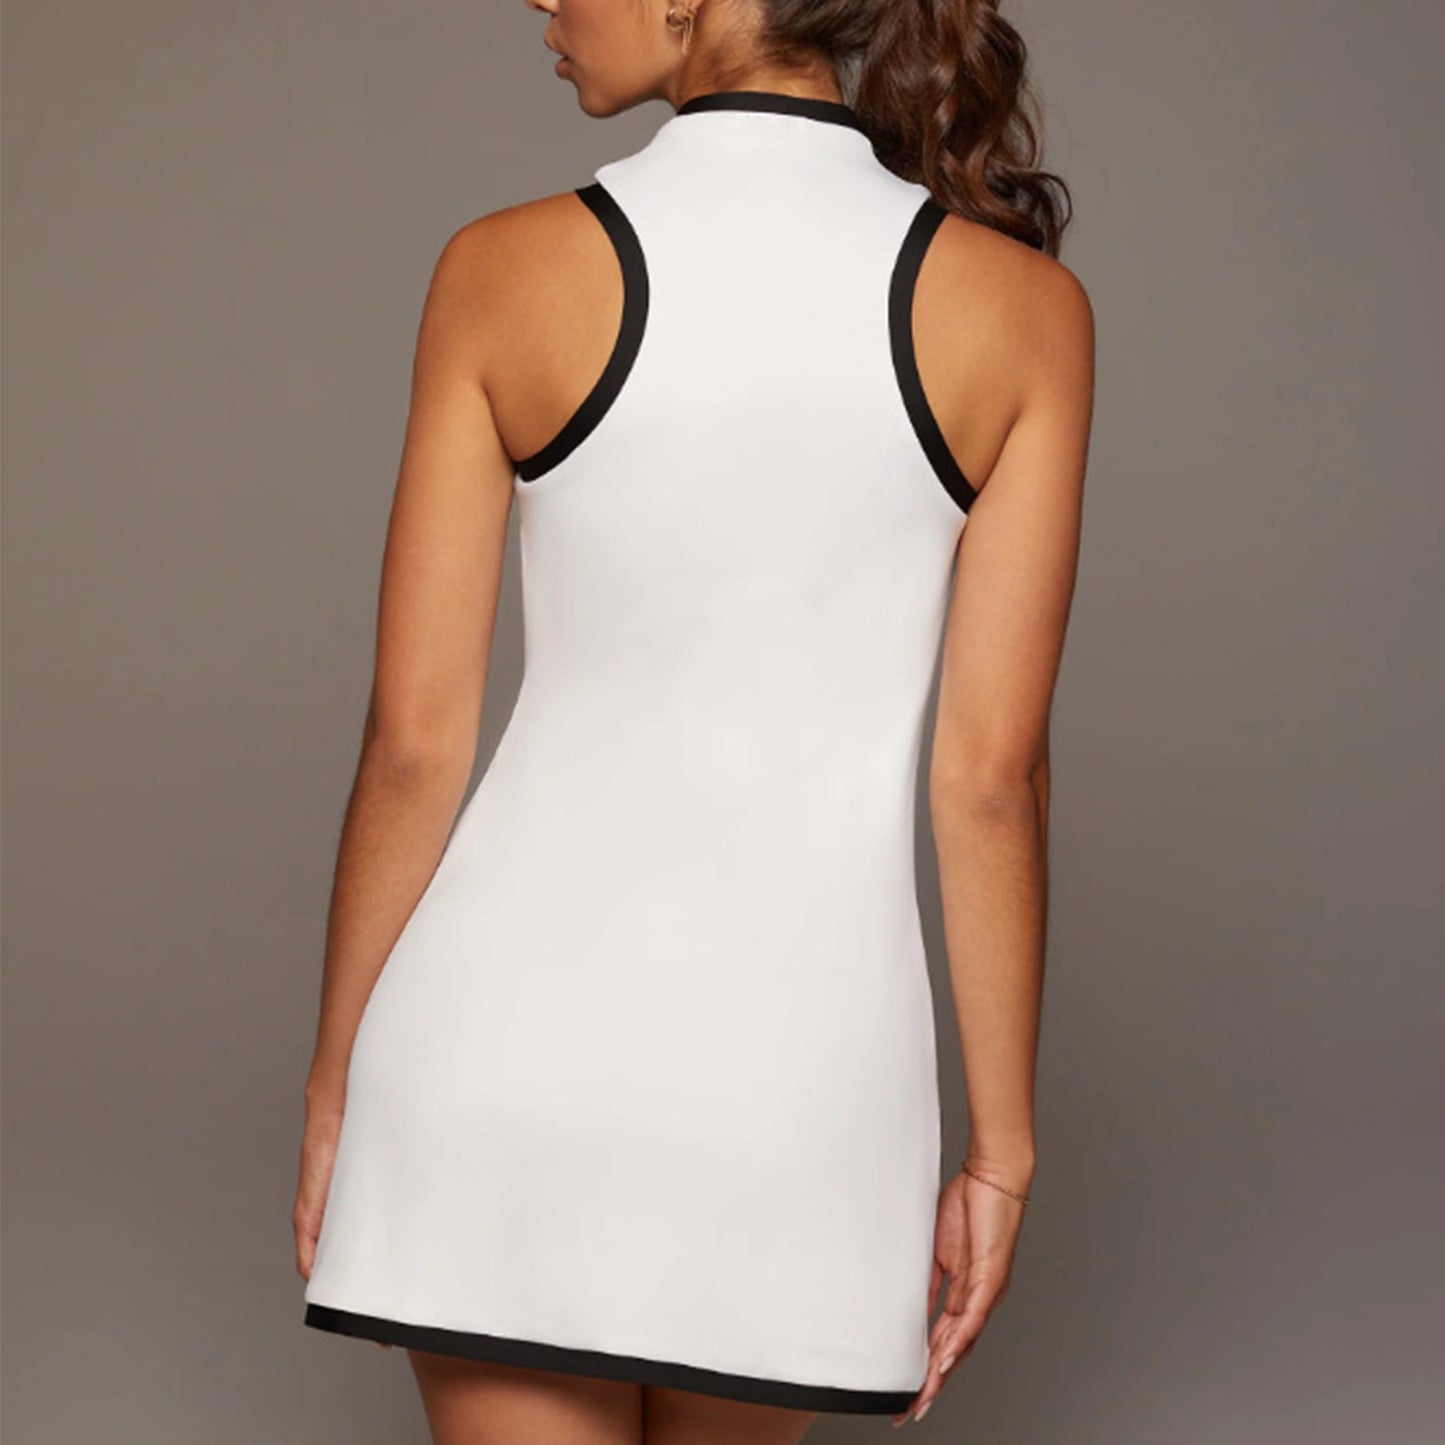 Women Golf Tennis Sport Dress Mock Neck Sleeveless Side Split Above Knee Length Dress Workout Dress Athletic Dress